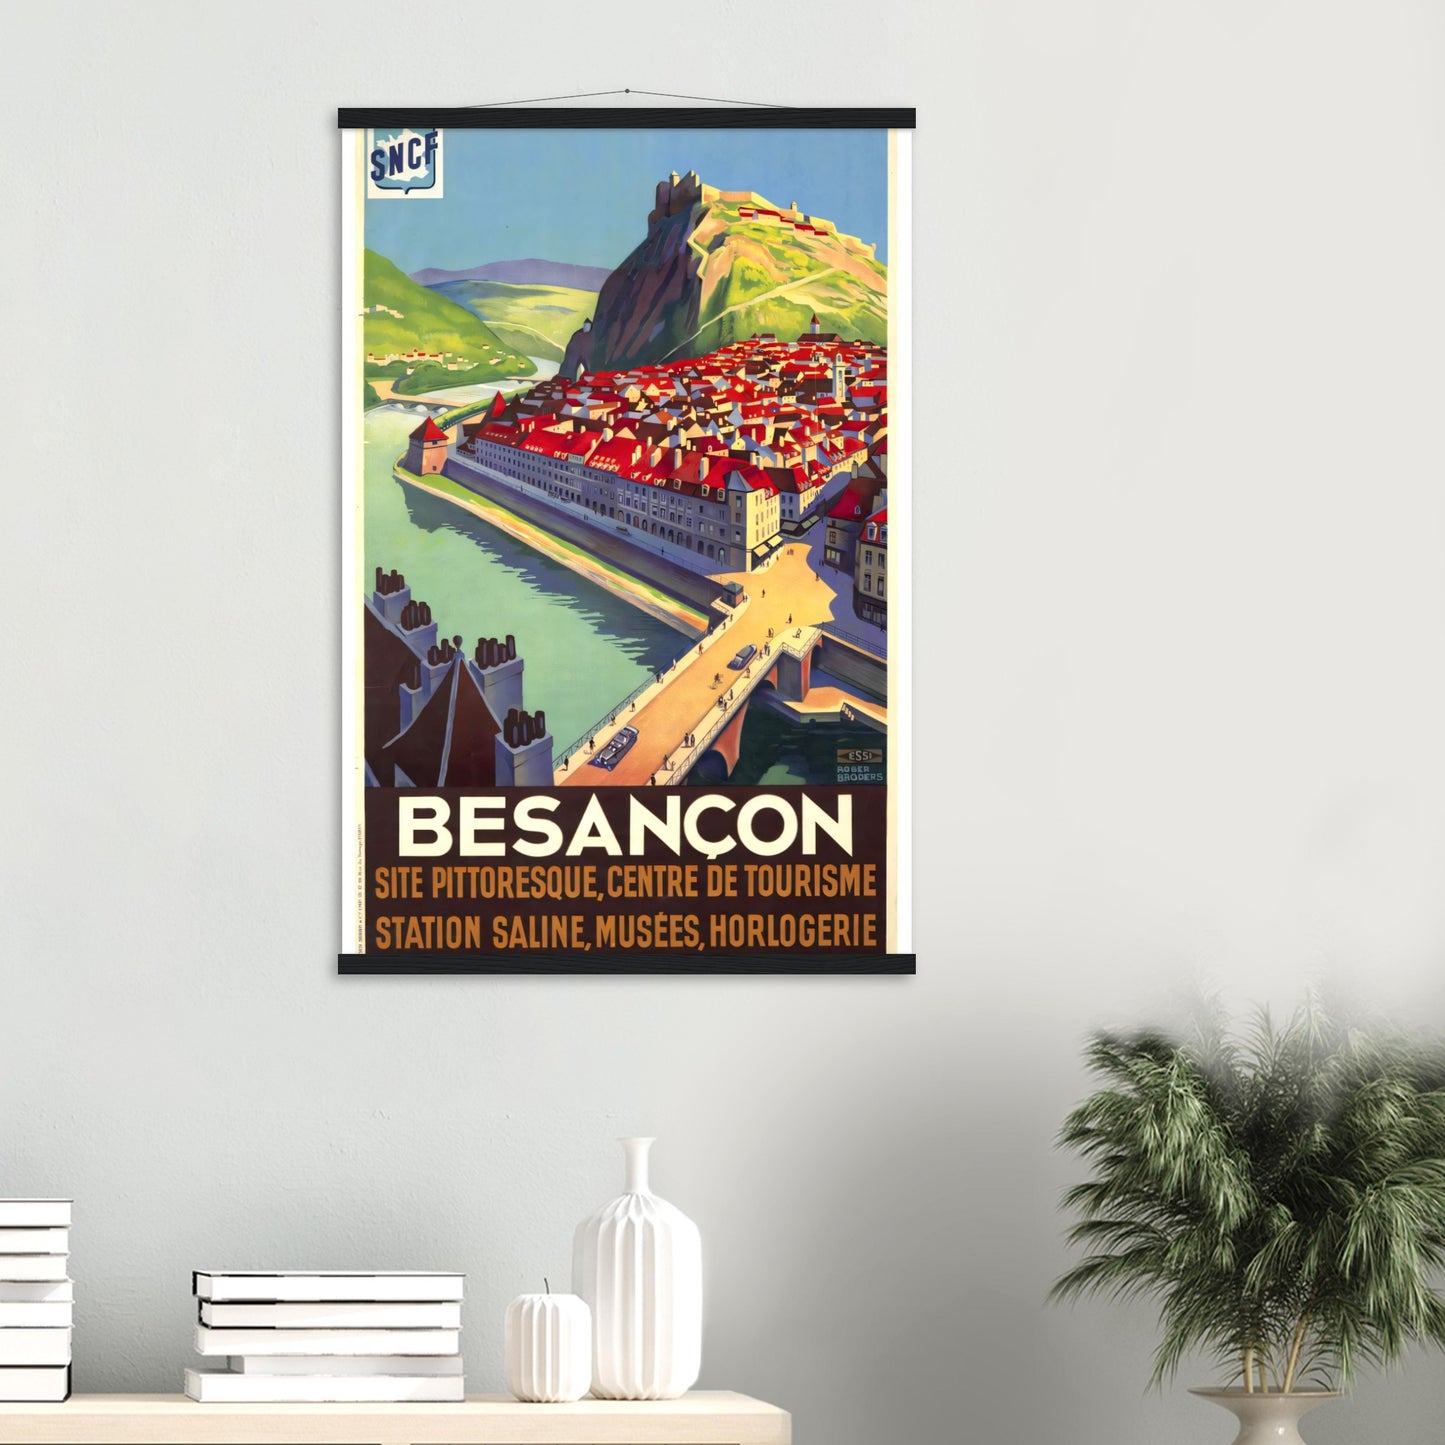 Besancon Vintage Poster Reprint on Premium Matte Paper - Posterify